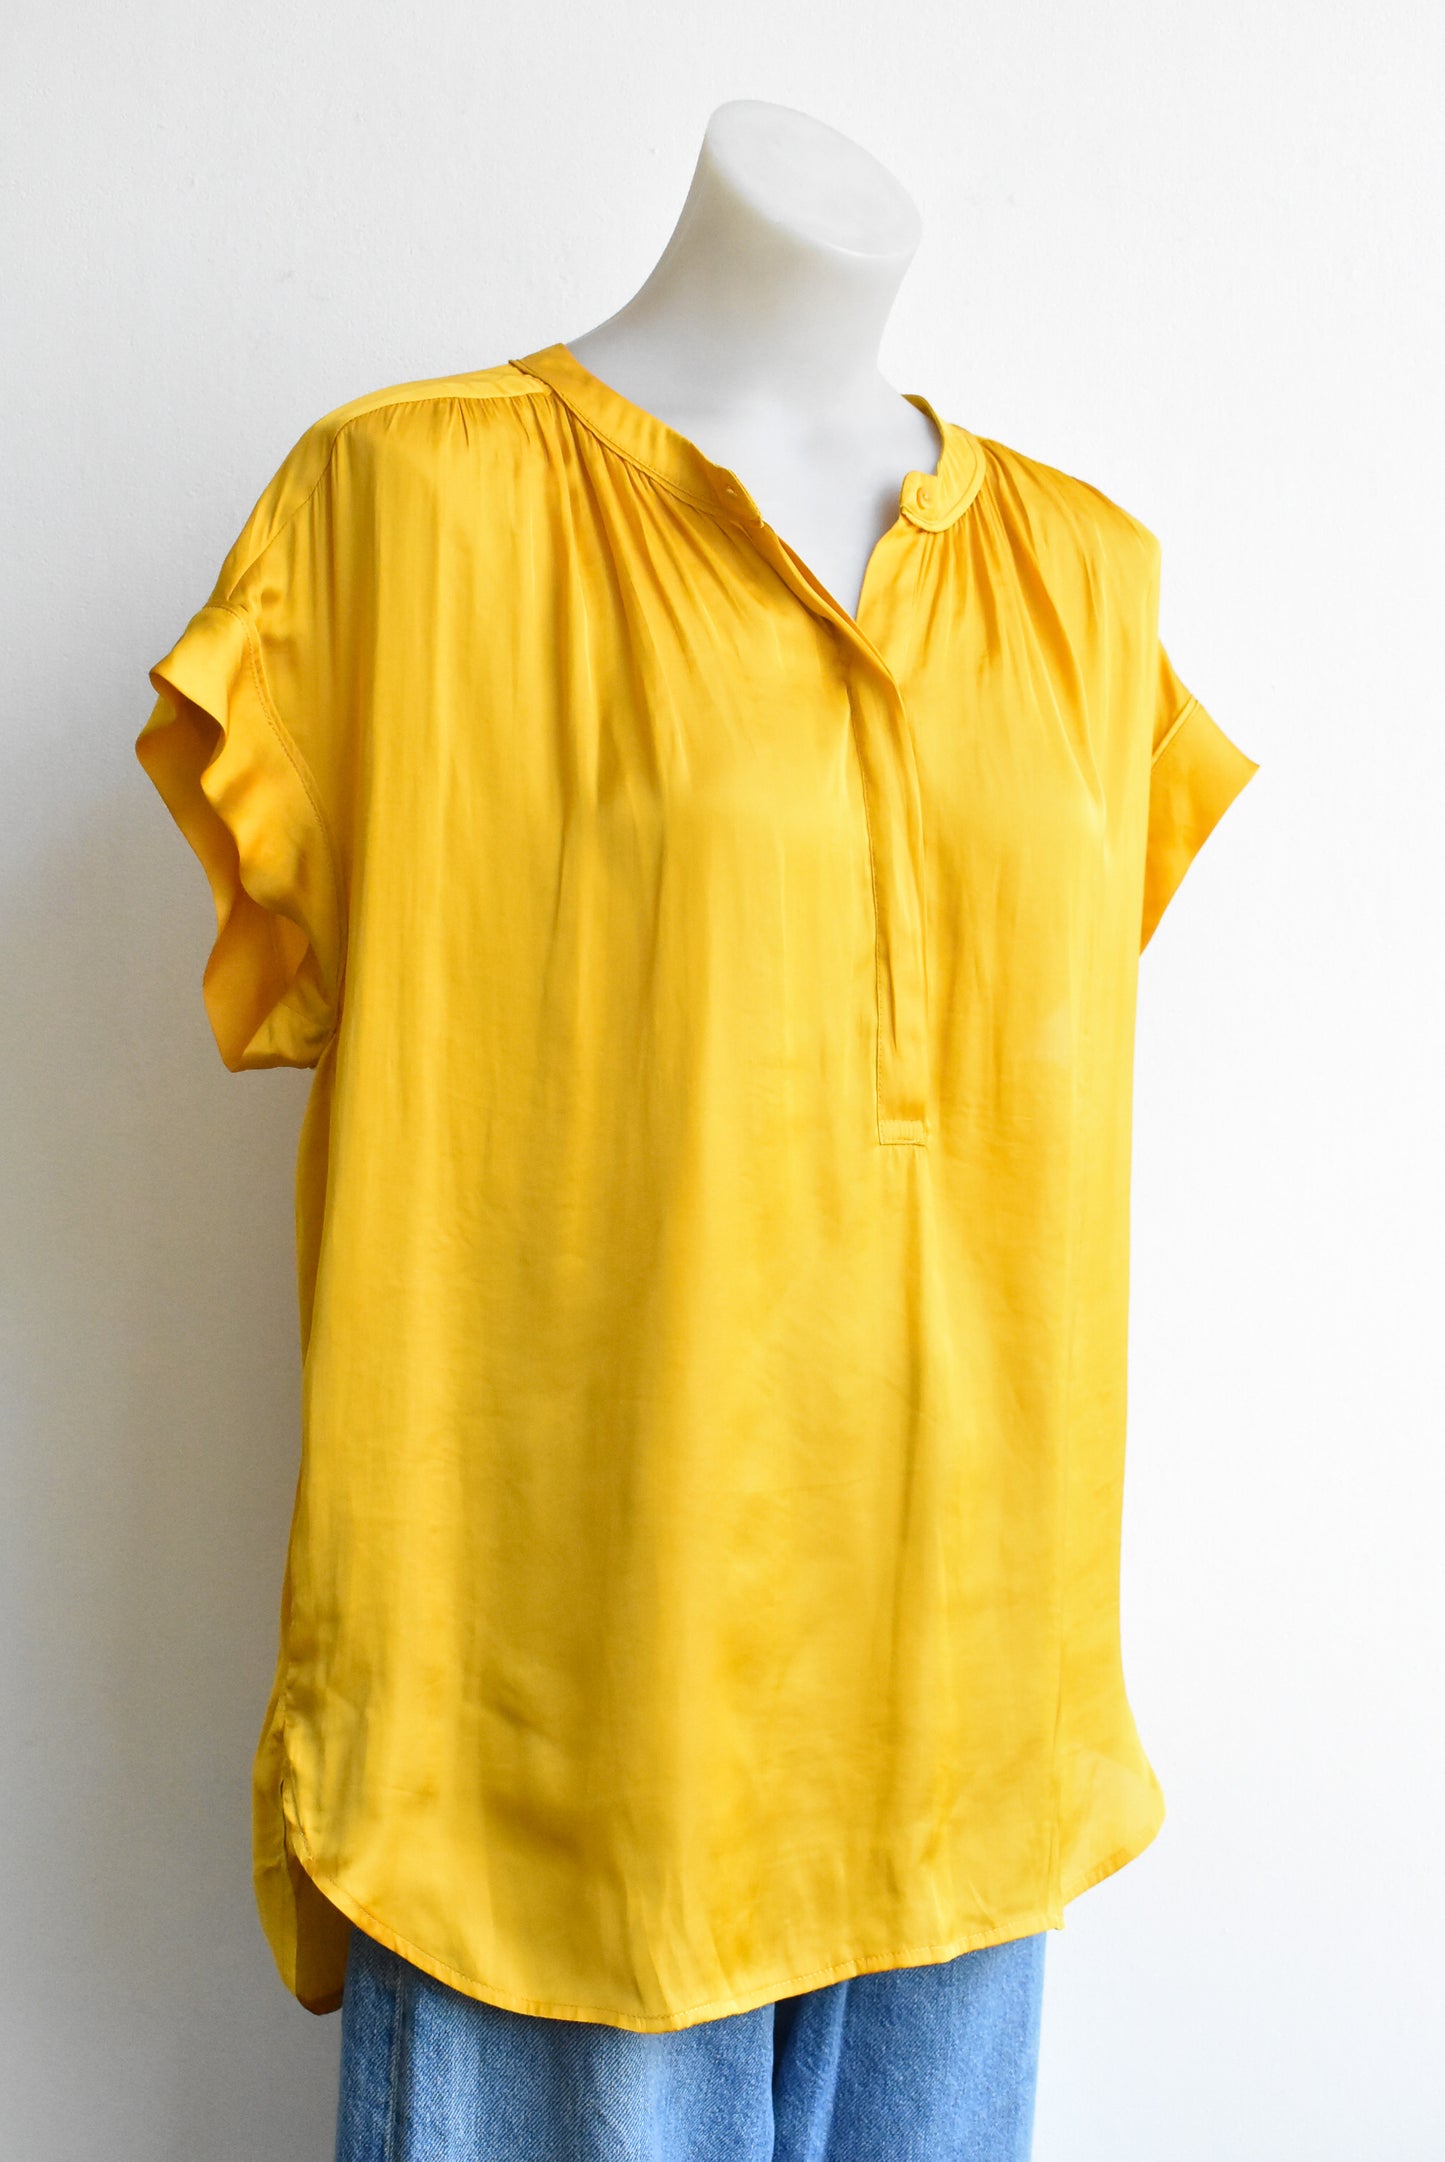 Short sleeve, yellow button blouse